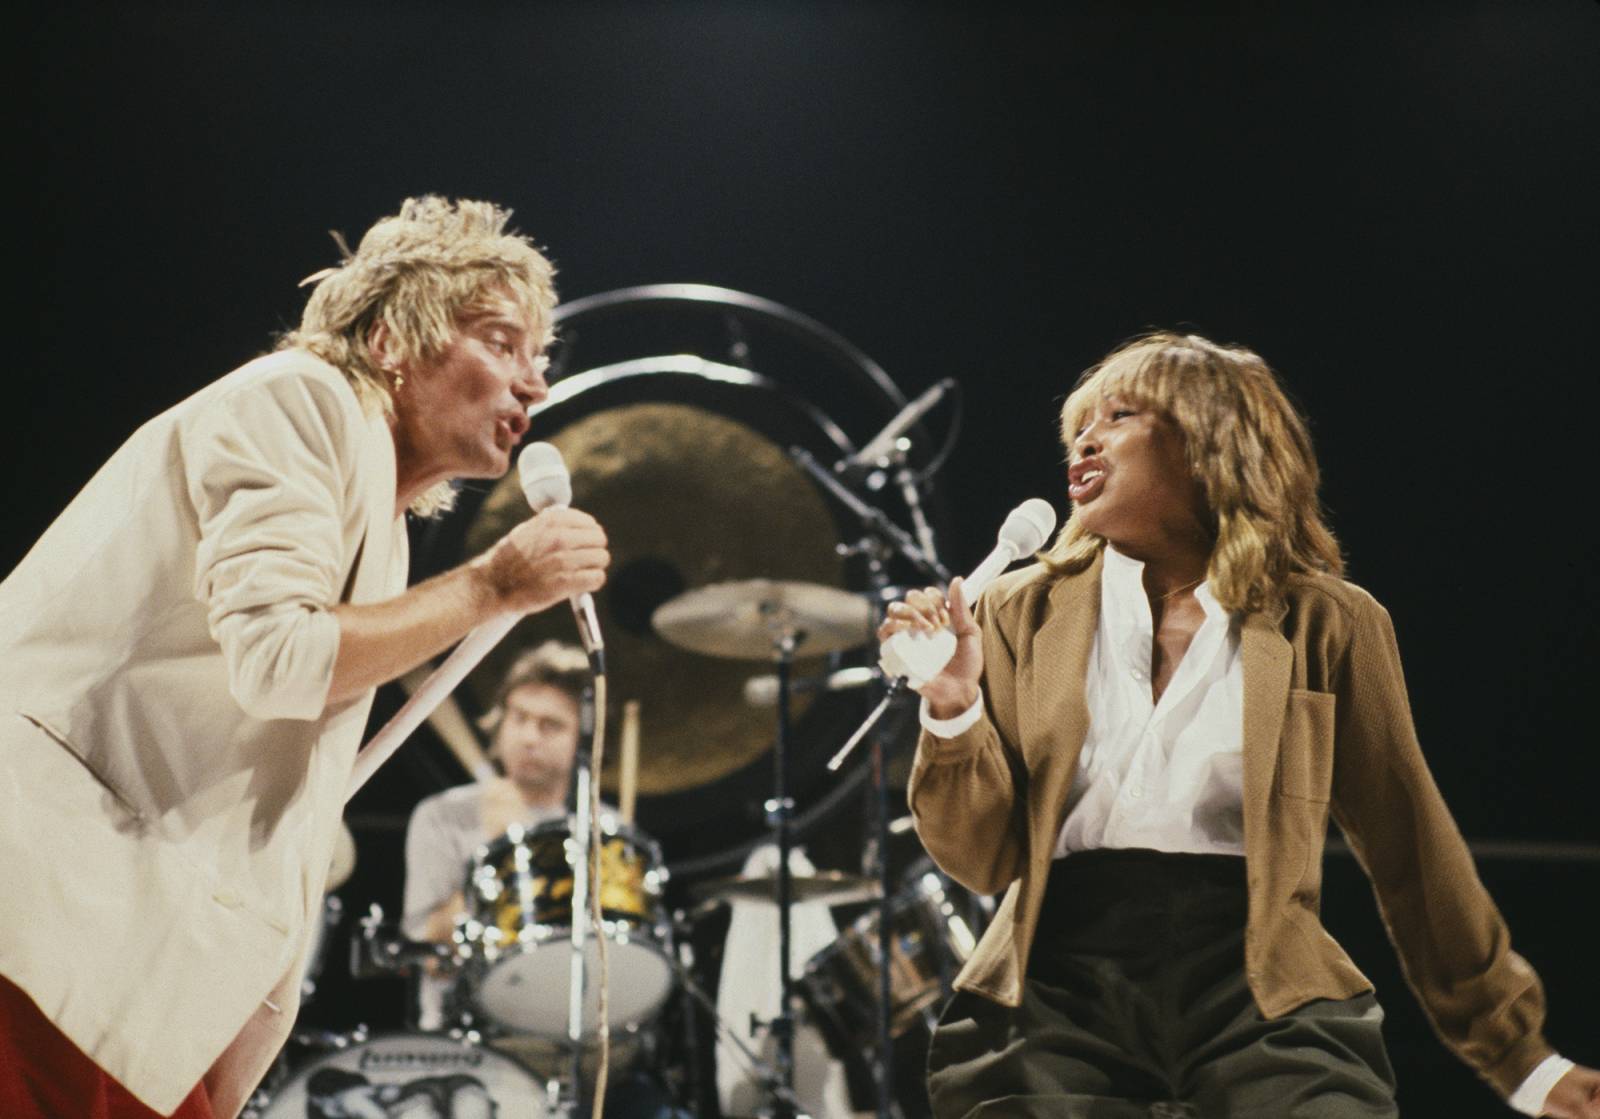 Rod Stewart i Tina Turner podczas koncertu (Fot. Christian SIMONPIETRI/Sygma via Getty Images)